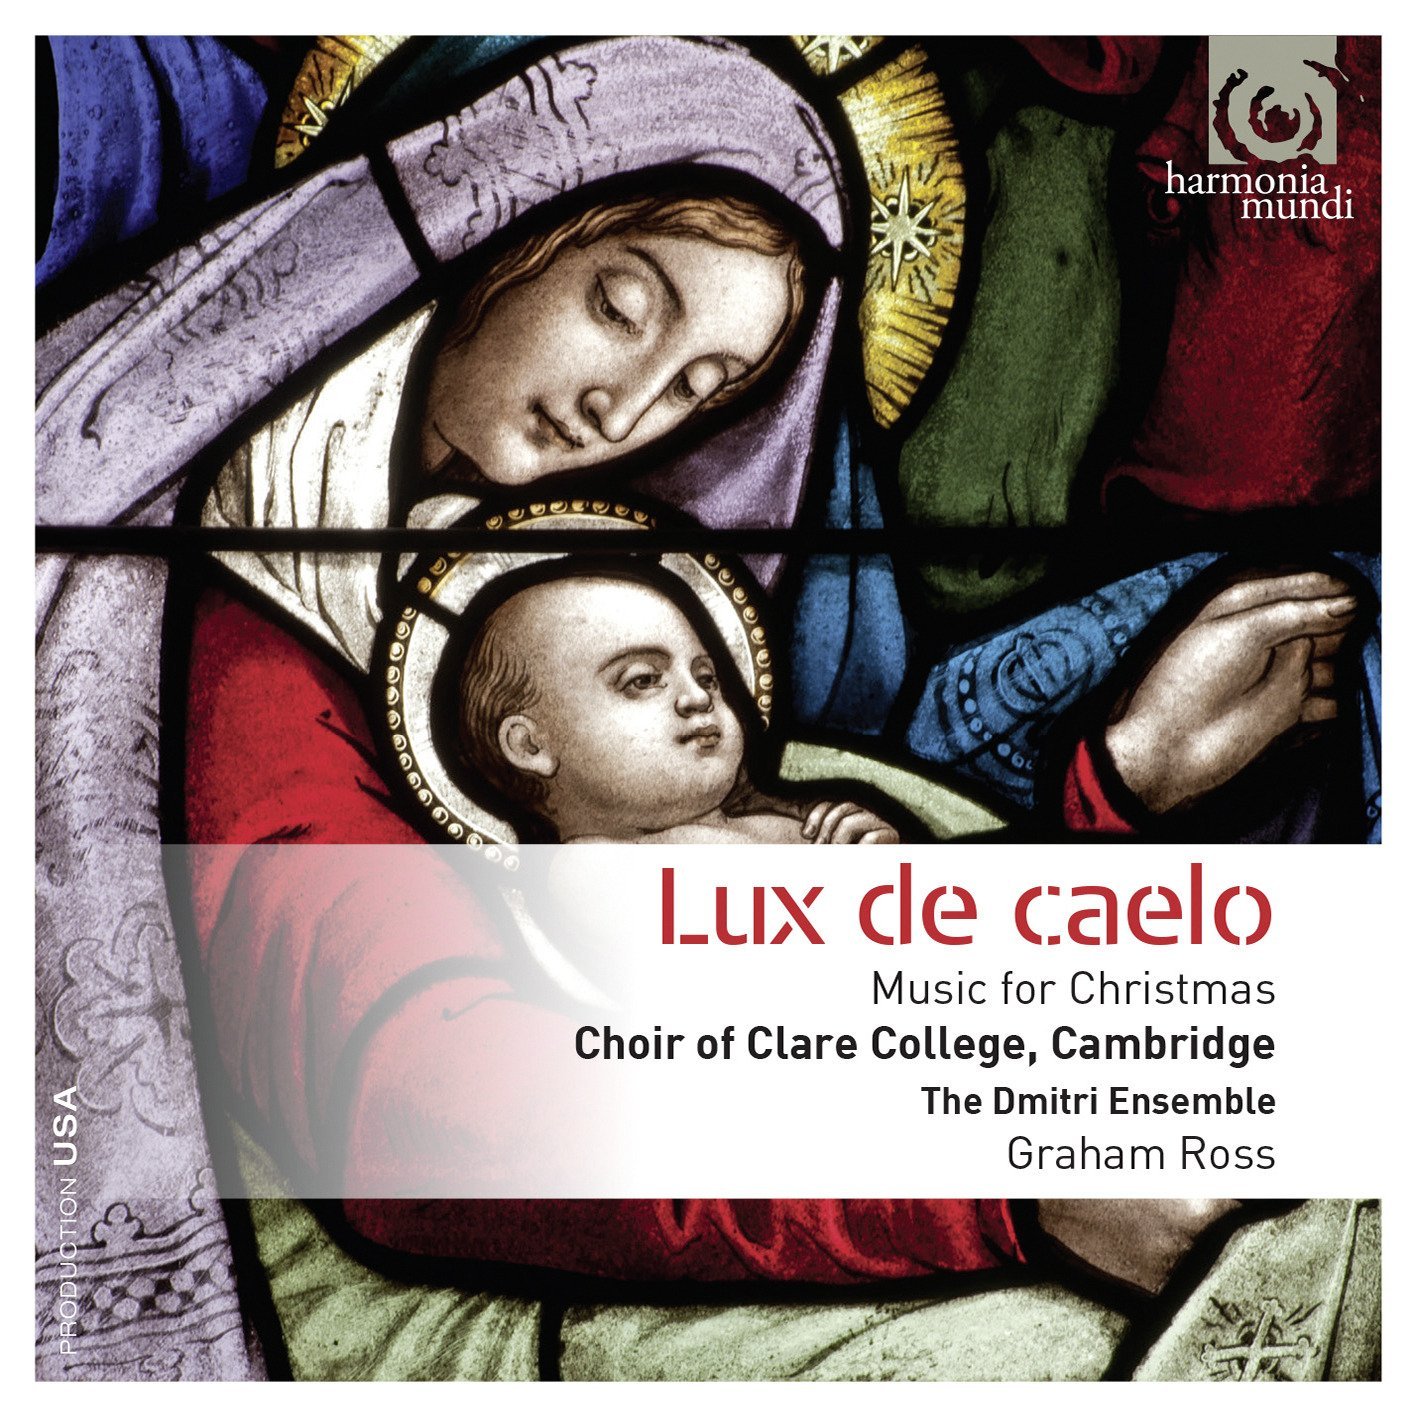 Choir of Clare College - Lux de caelo: Music for Christmas (2014) [HDTracks FLAC 24bit/96kHz]